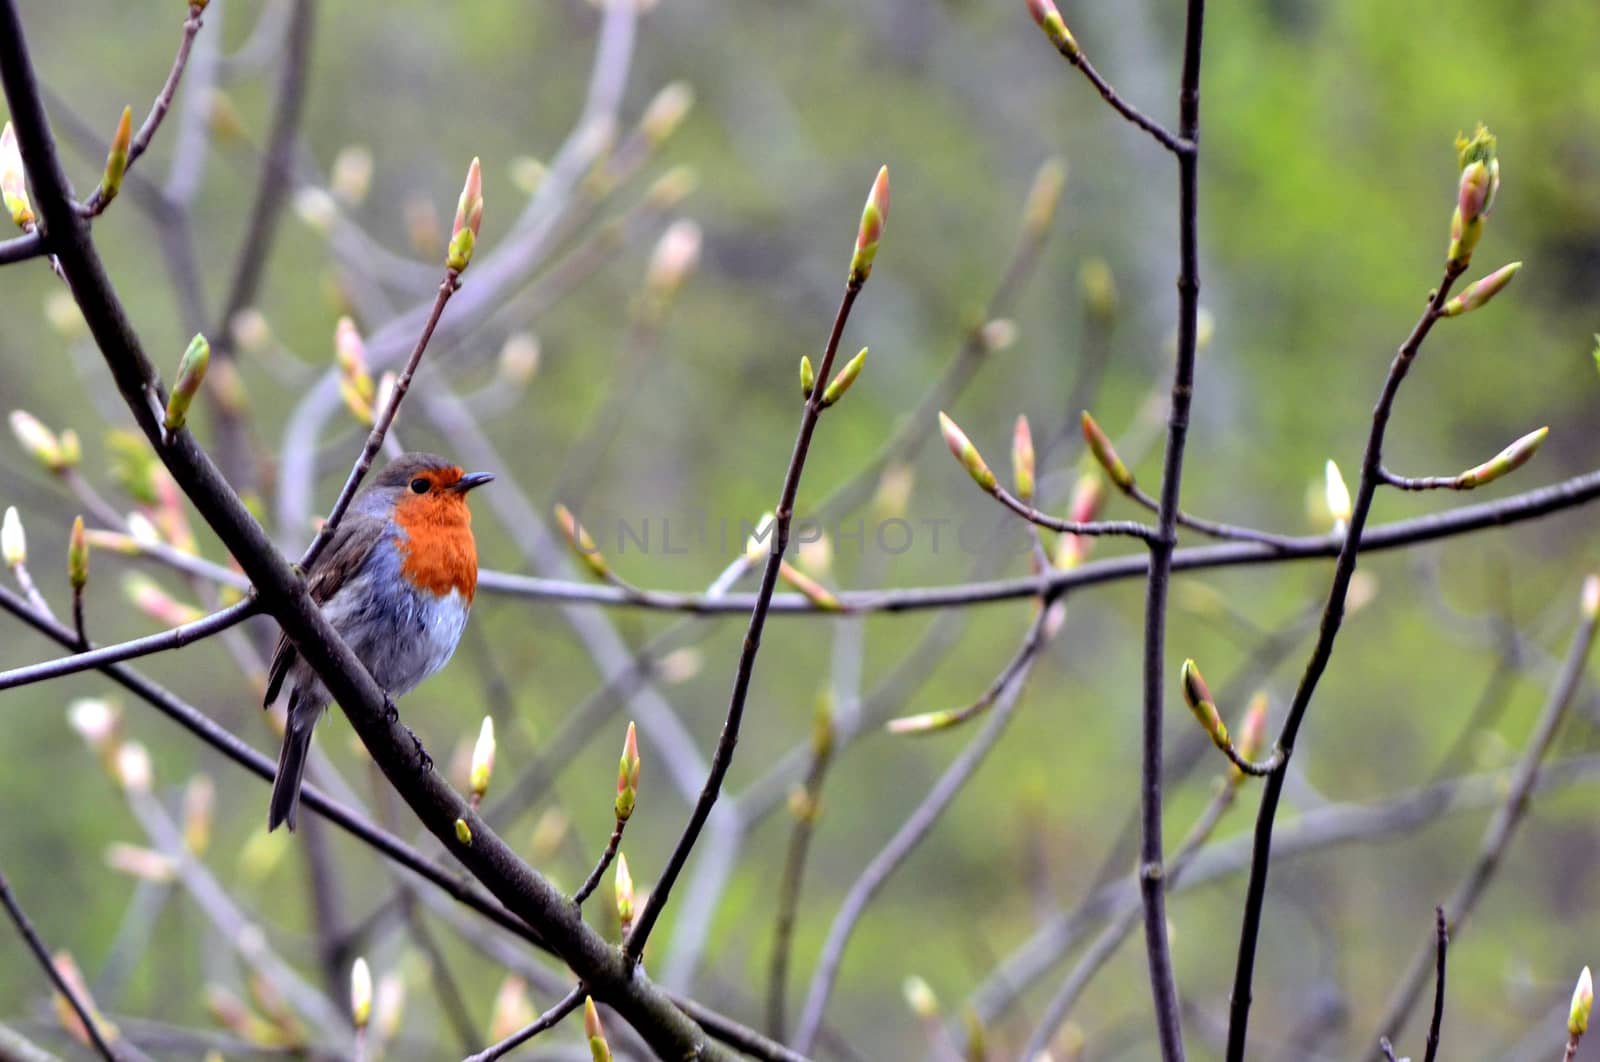 European robin on a branch by hibrida13